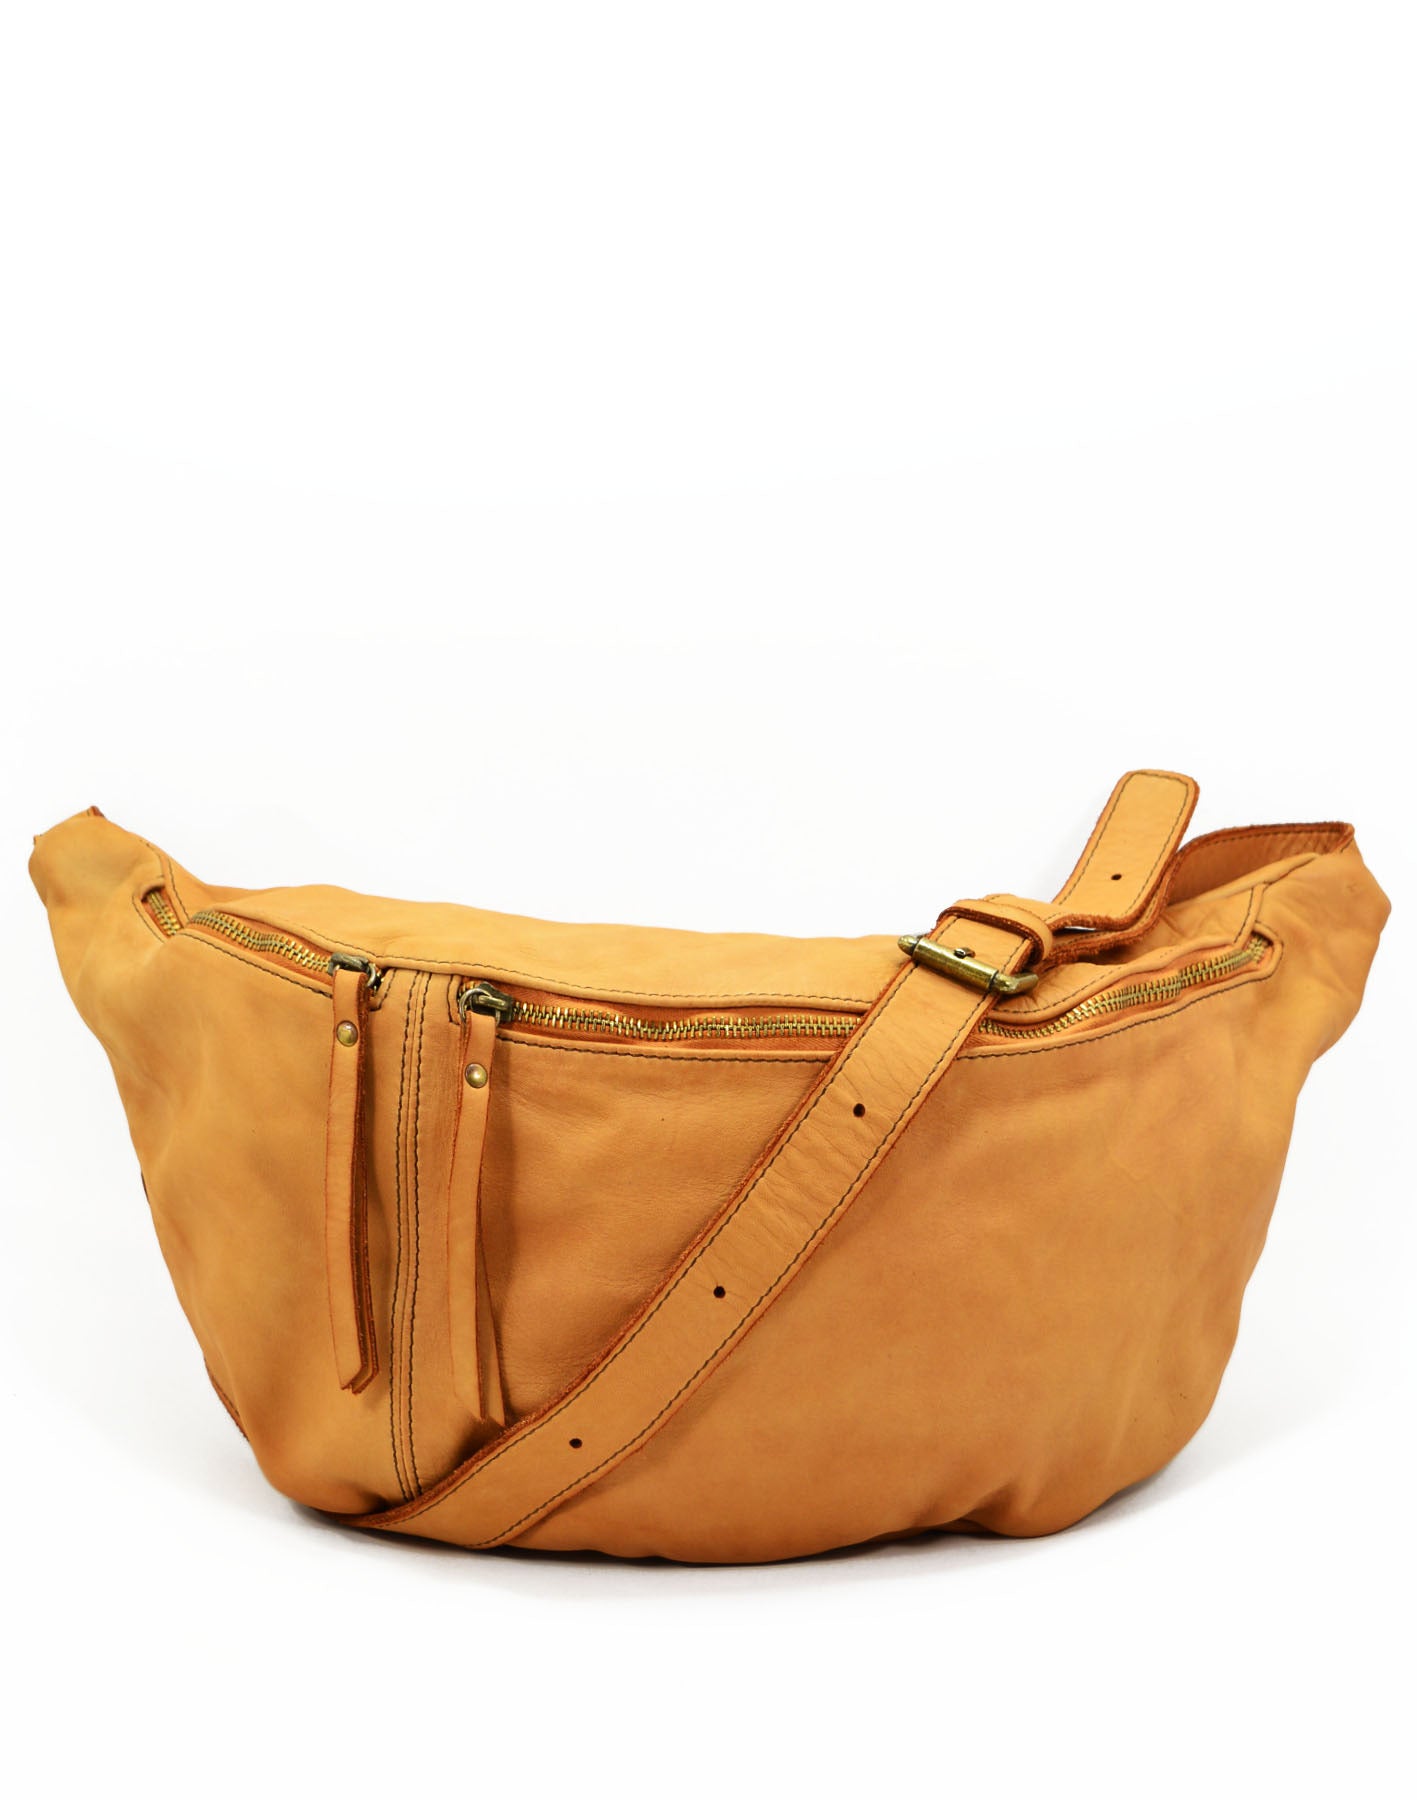 Soft leather Oversized Bum bag